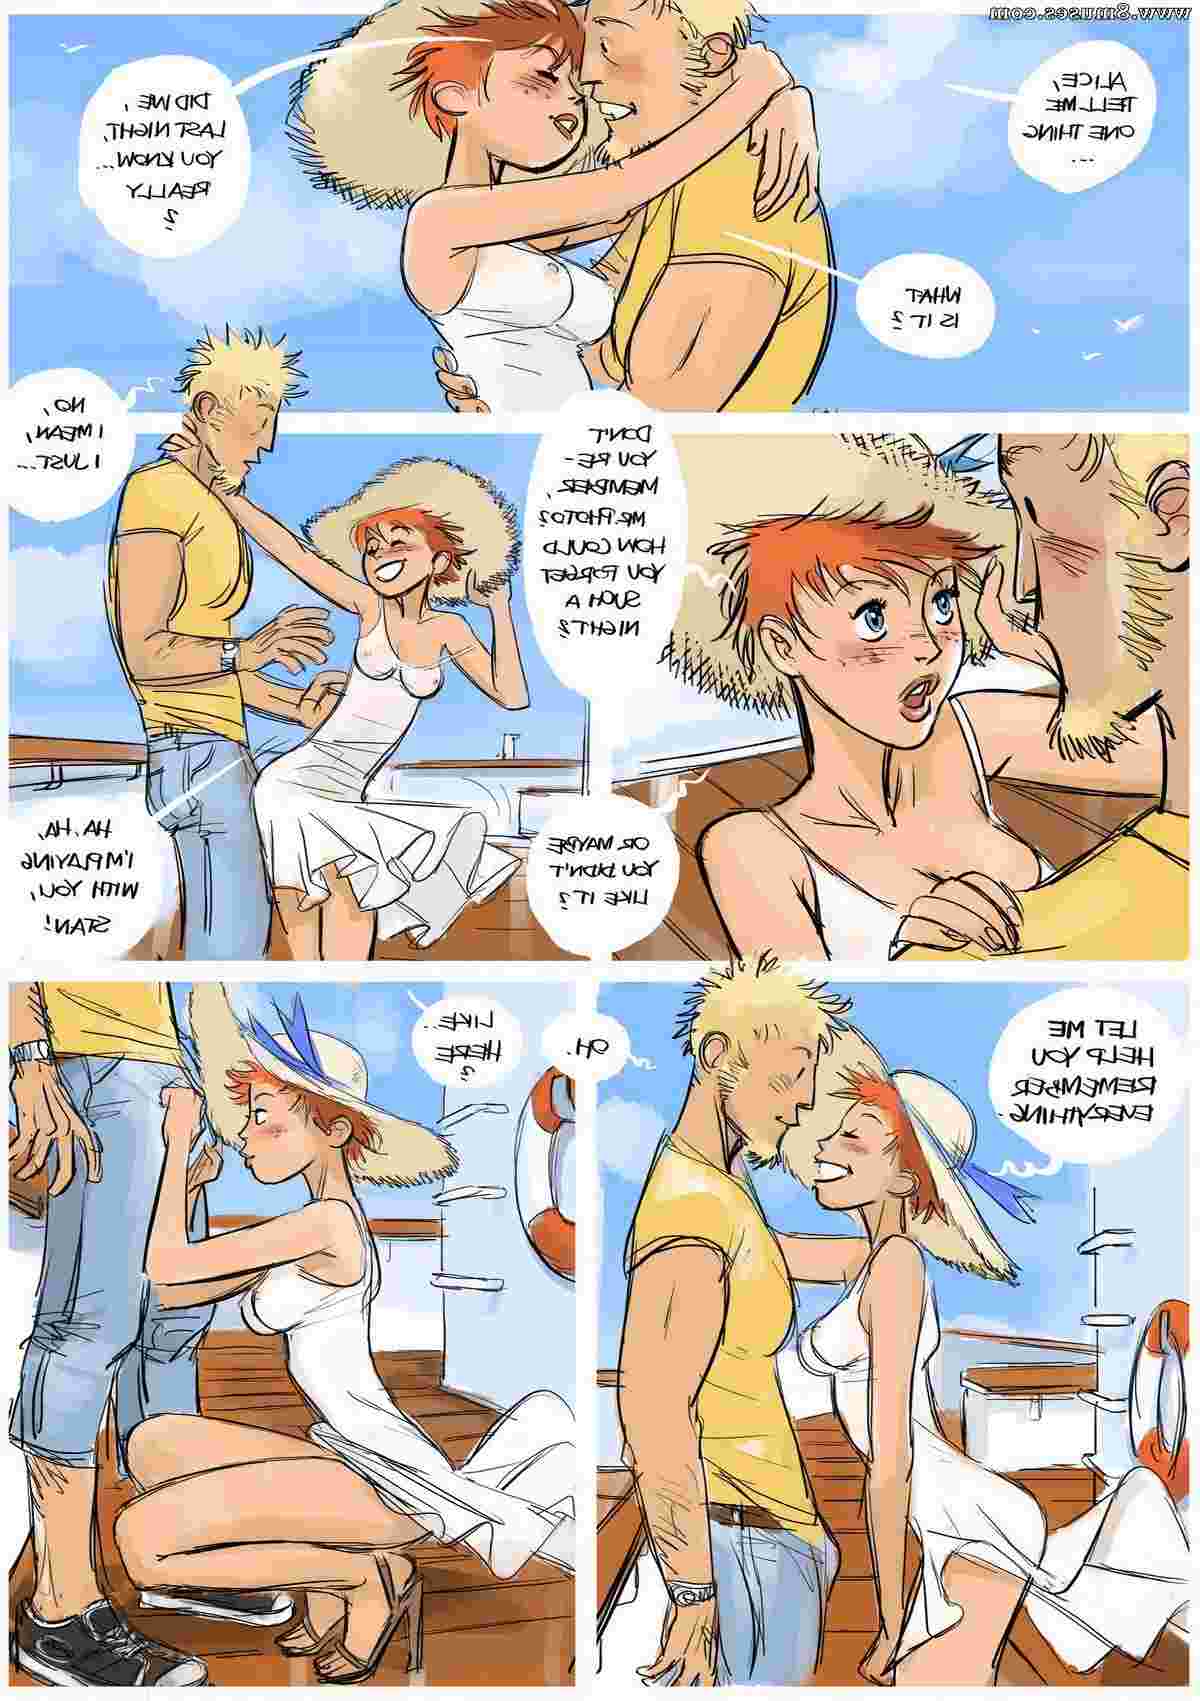 Slipshine-Comics/Lust-Boat Lust_Boat__8muses_-_Sex_and_Porn_Comics_46.jpg